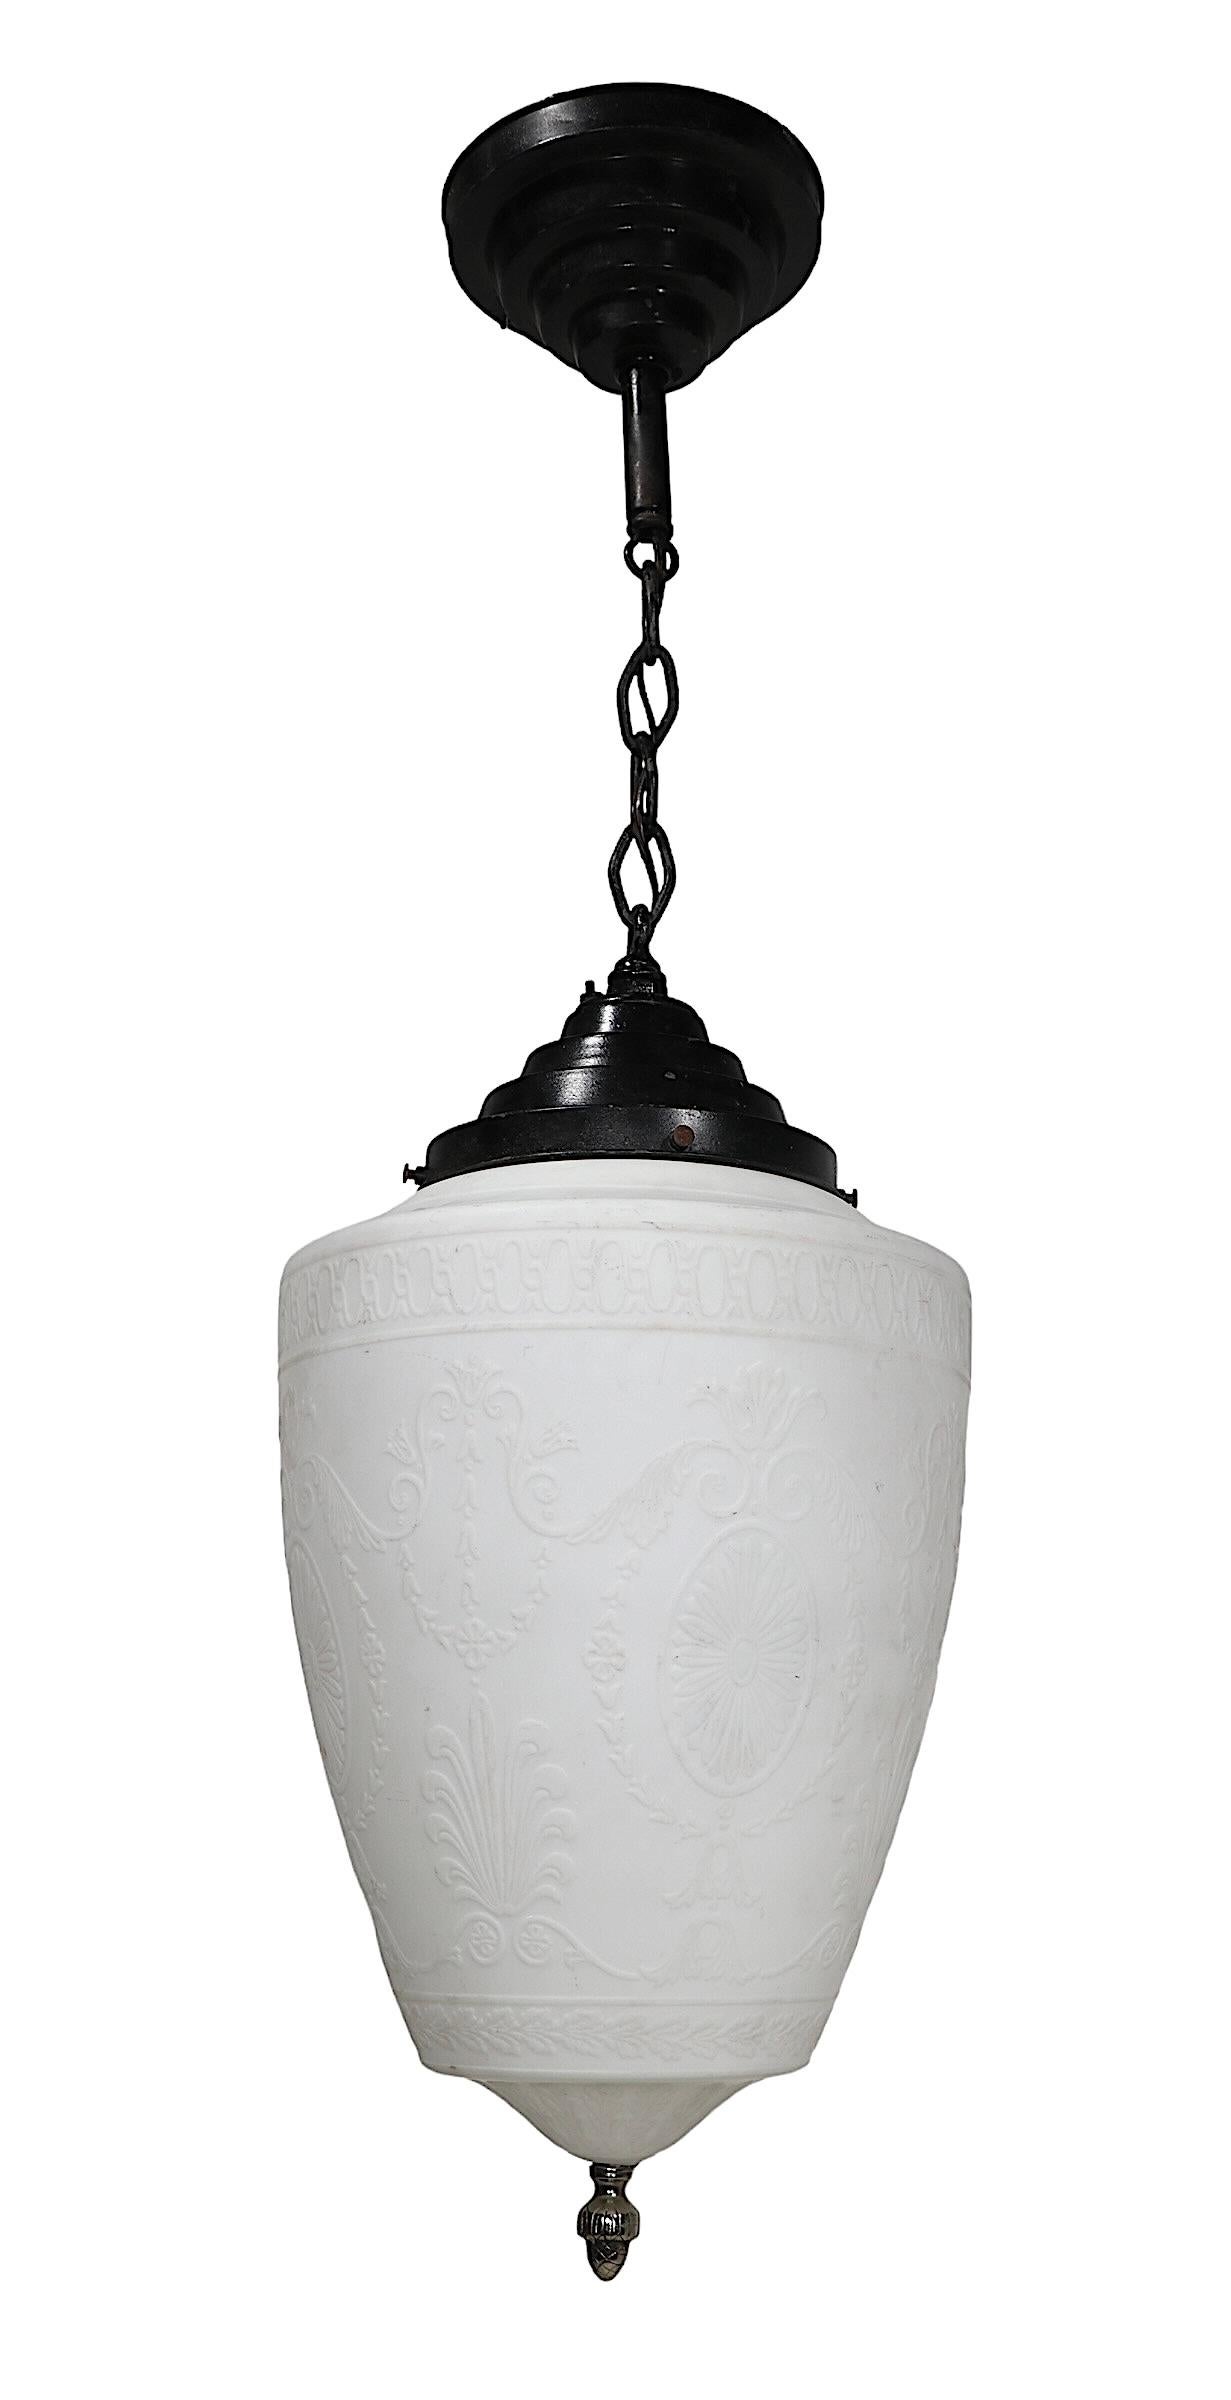 Art Deco Calcite Hanging Pendant Globe att. to Frederick Carder for Steuben  For Sale 3